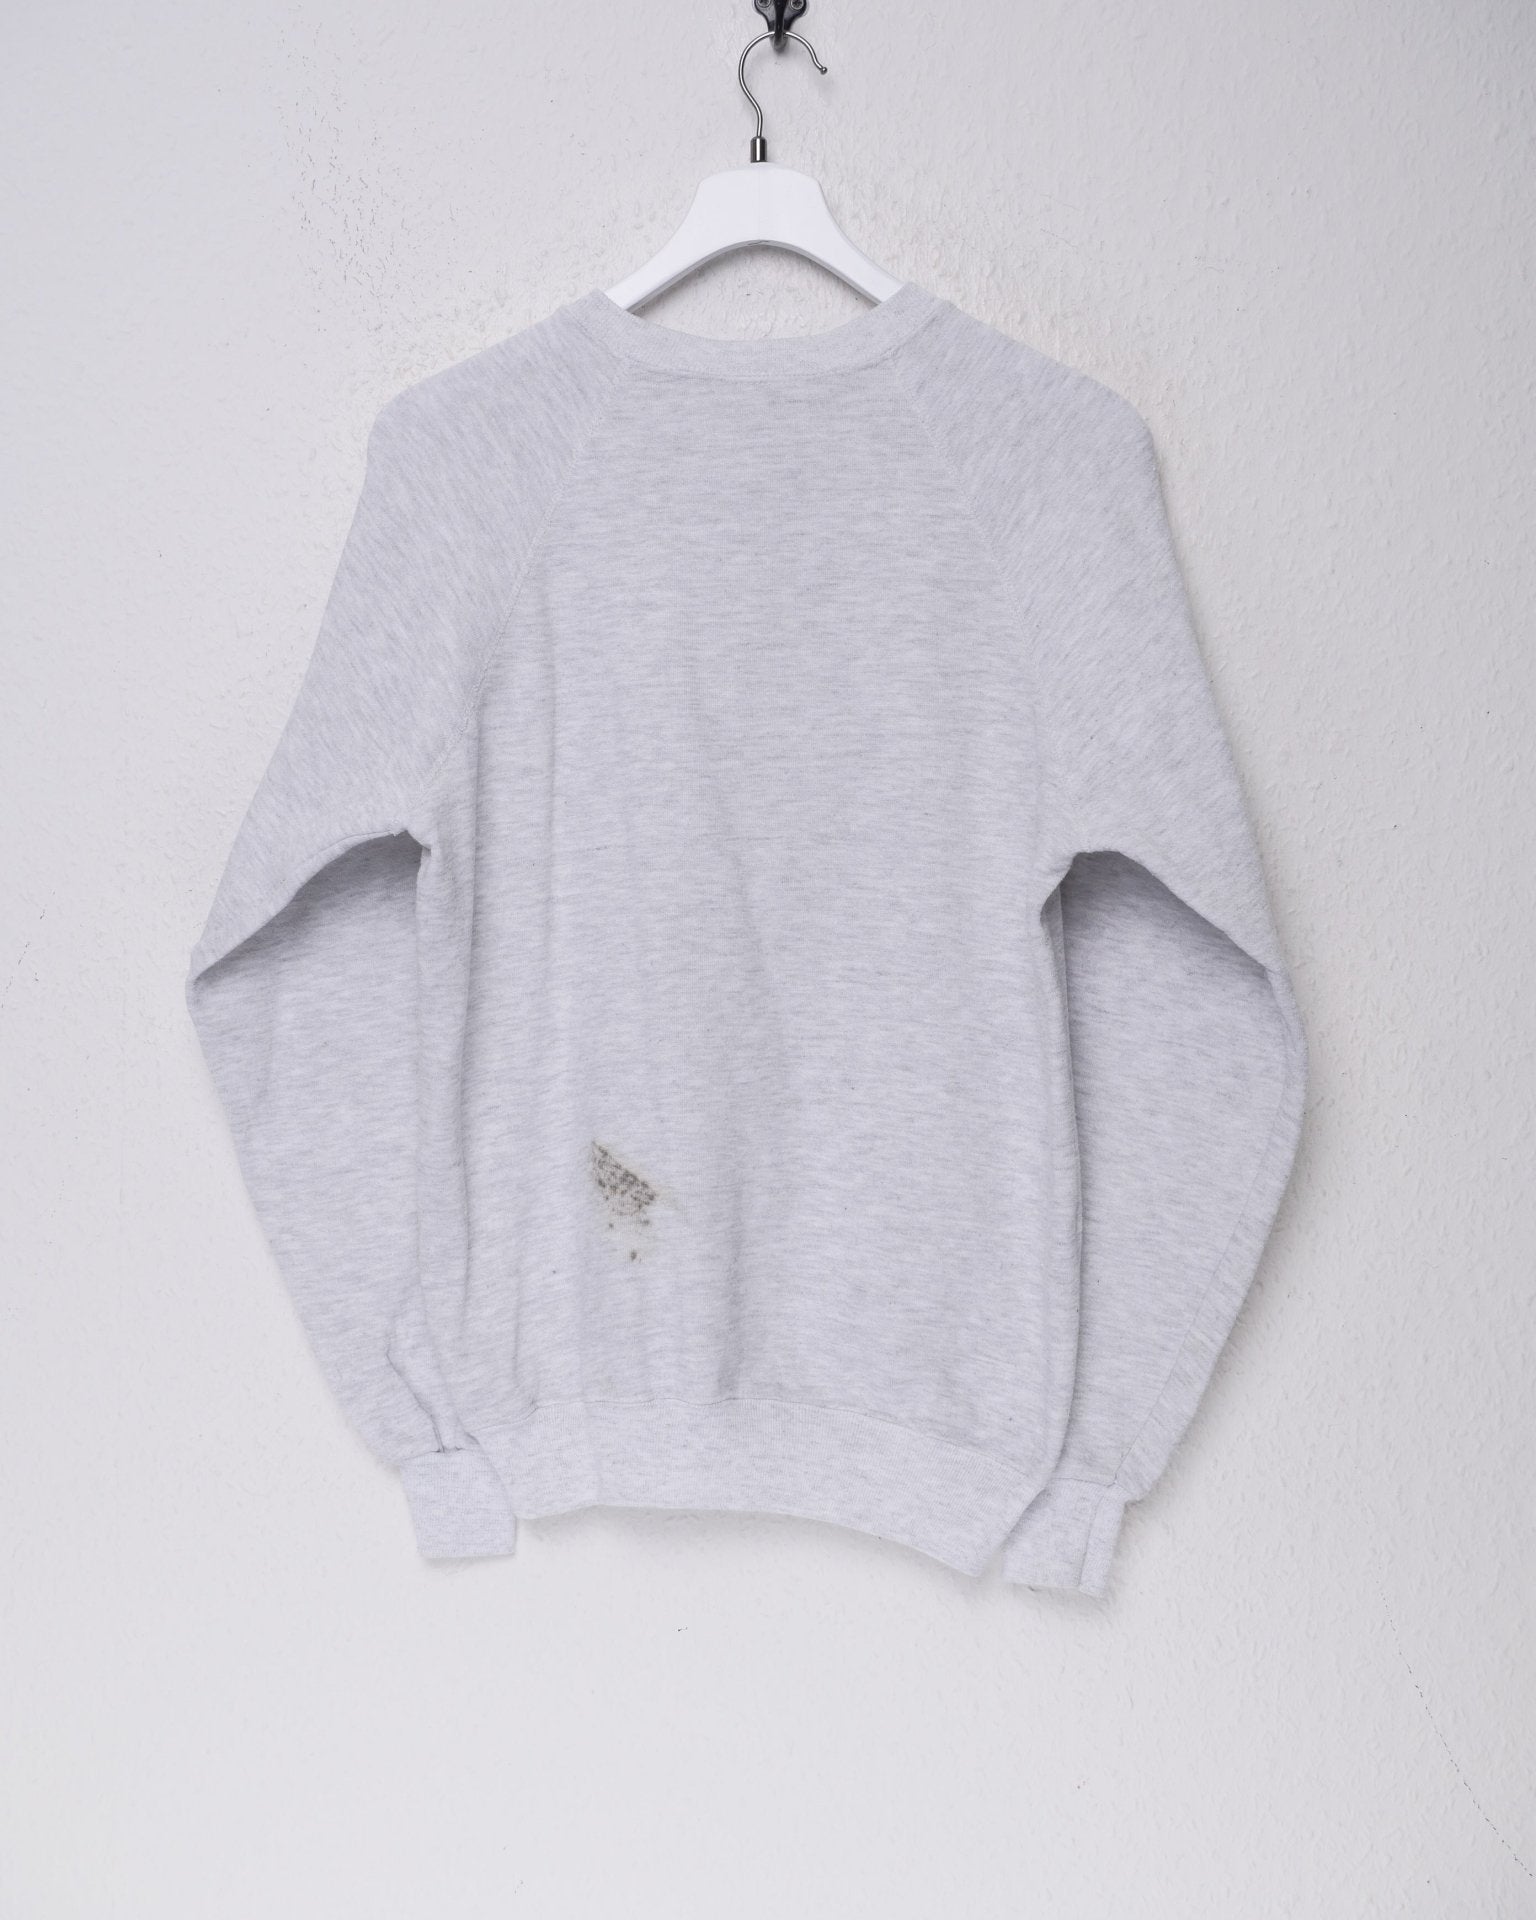 Lee 'Bah Humbug' printed Graphic grey Sweater - Peeces